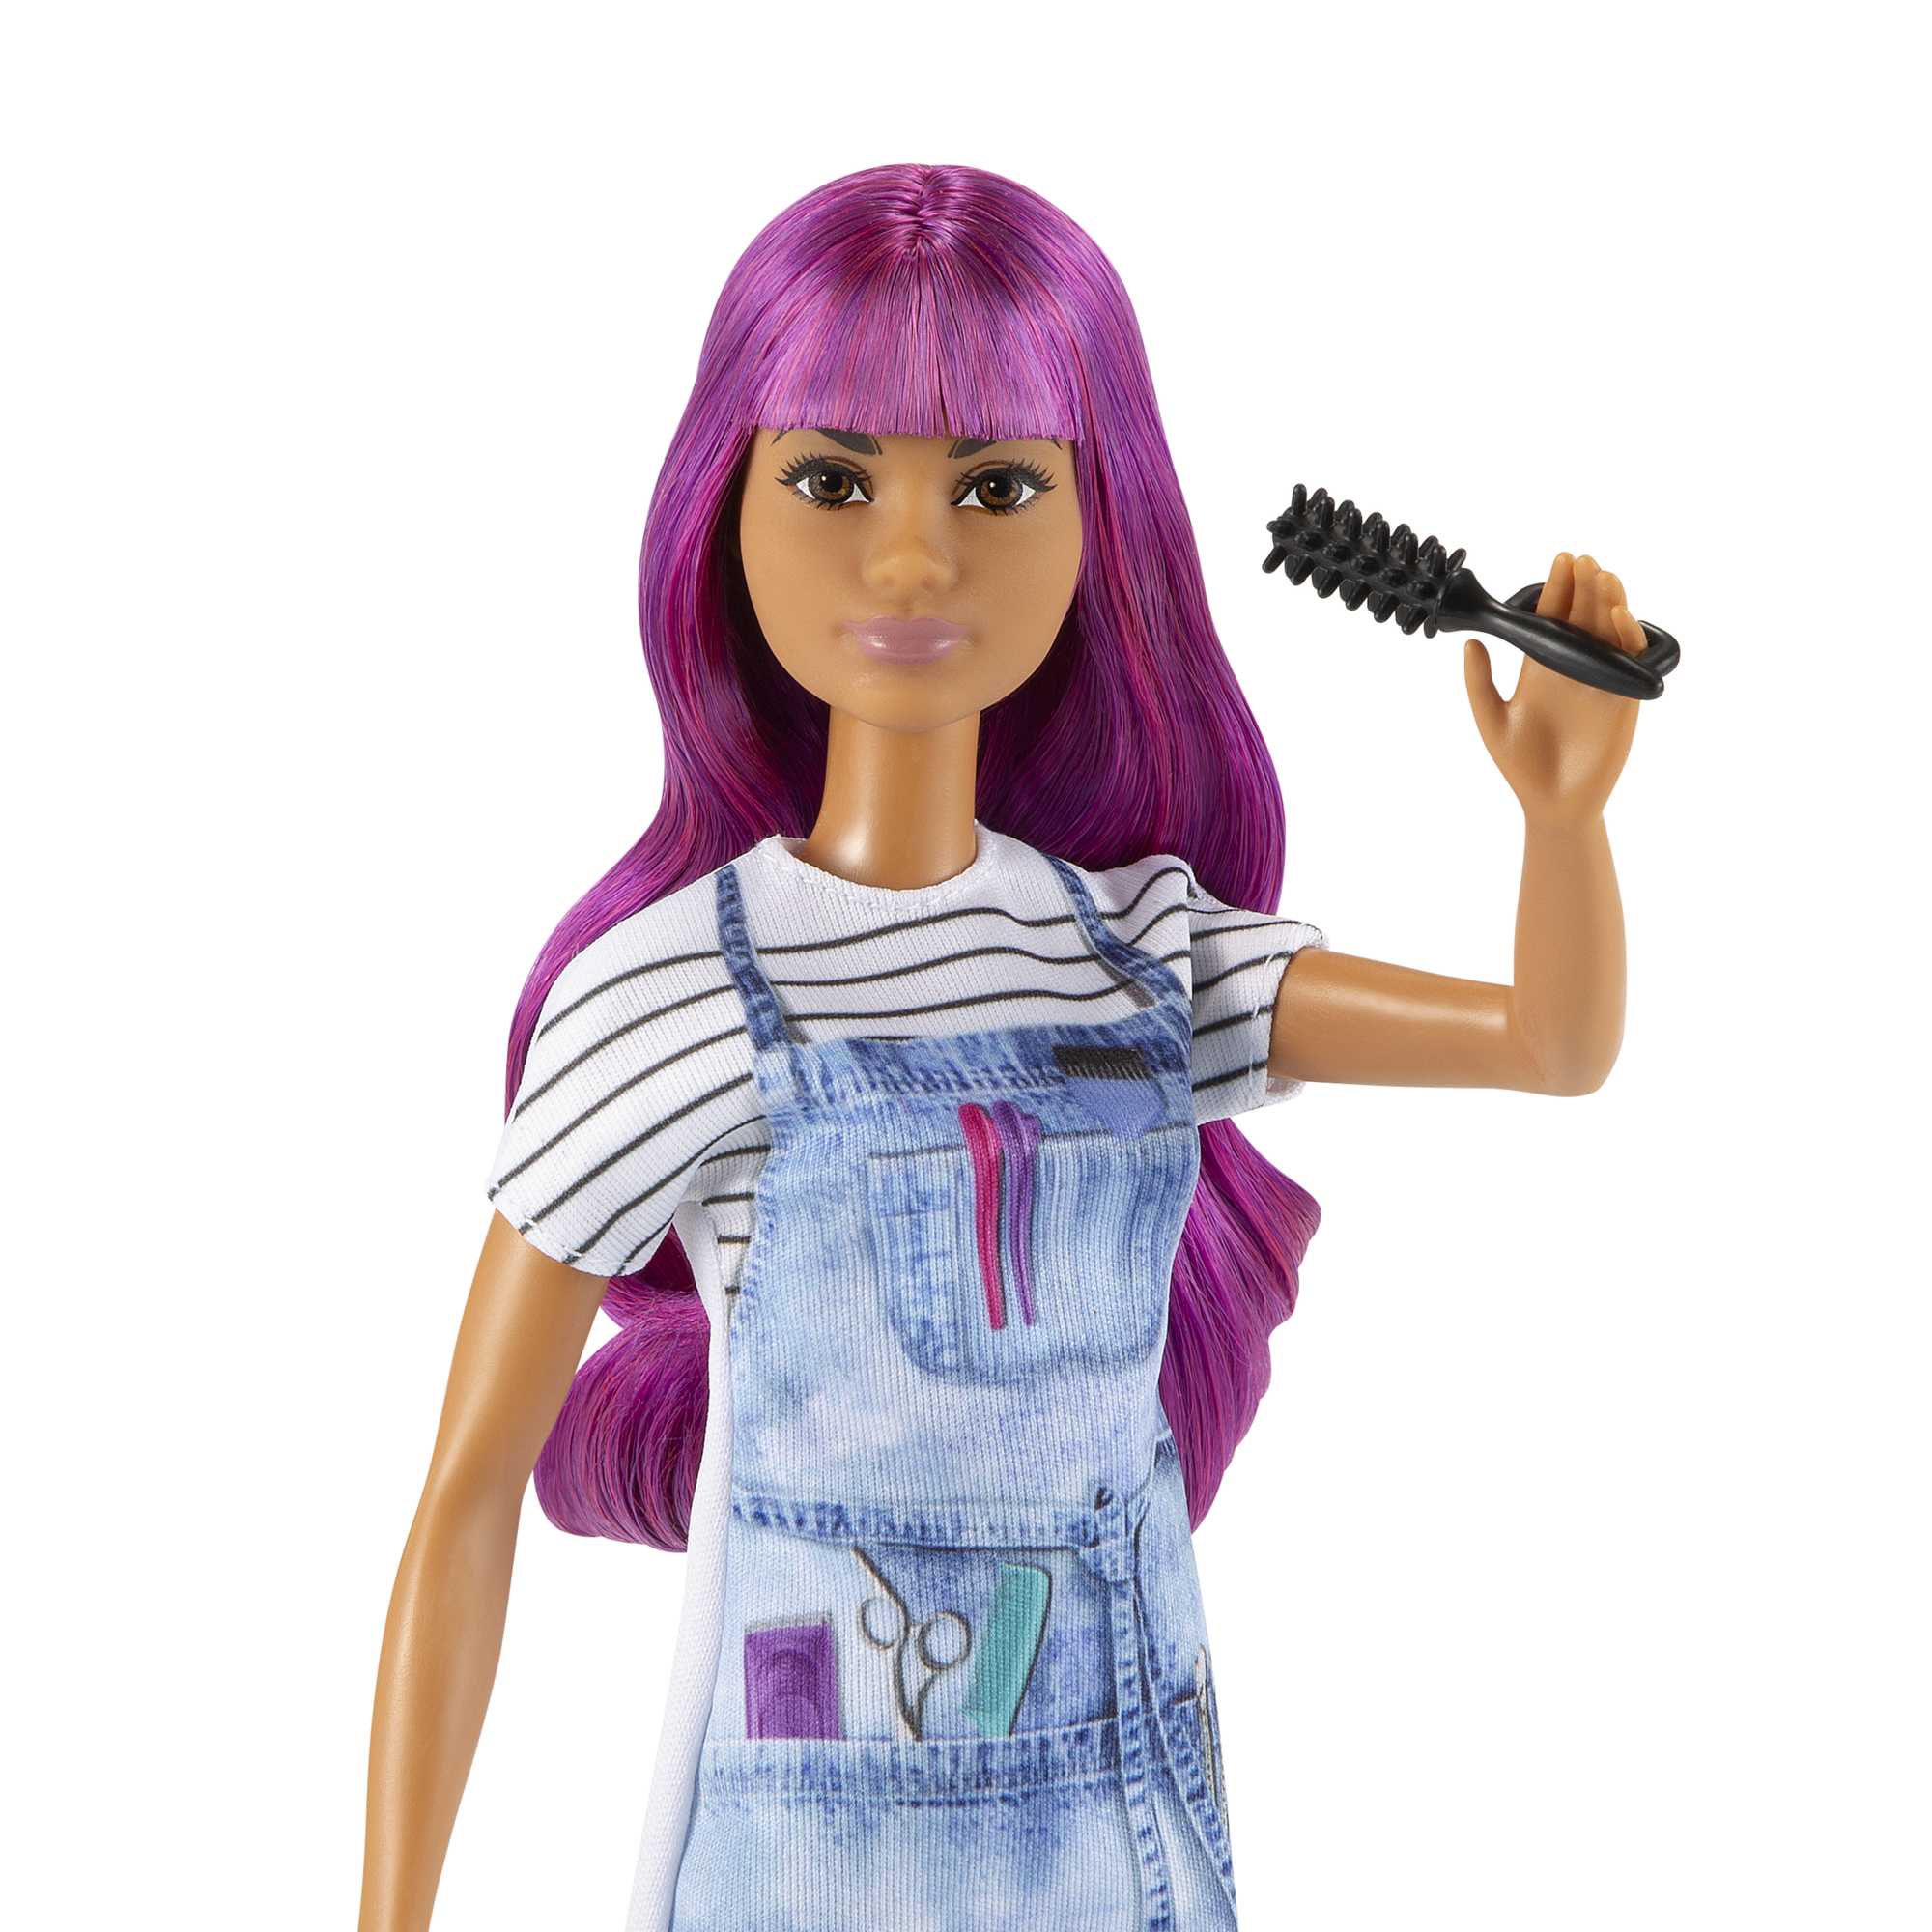 Barbie Salon Stylist Doll | Mattel